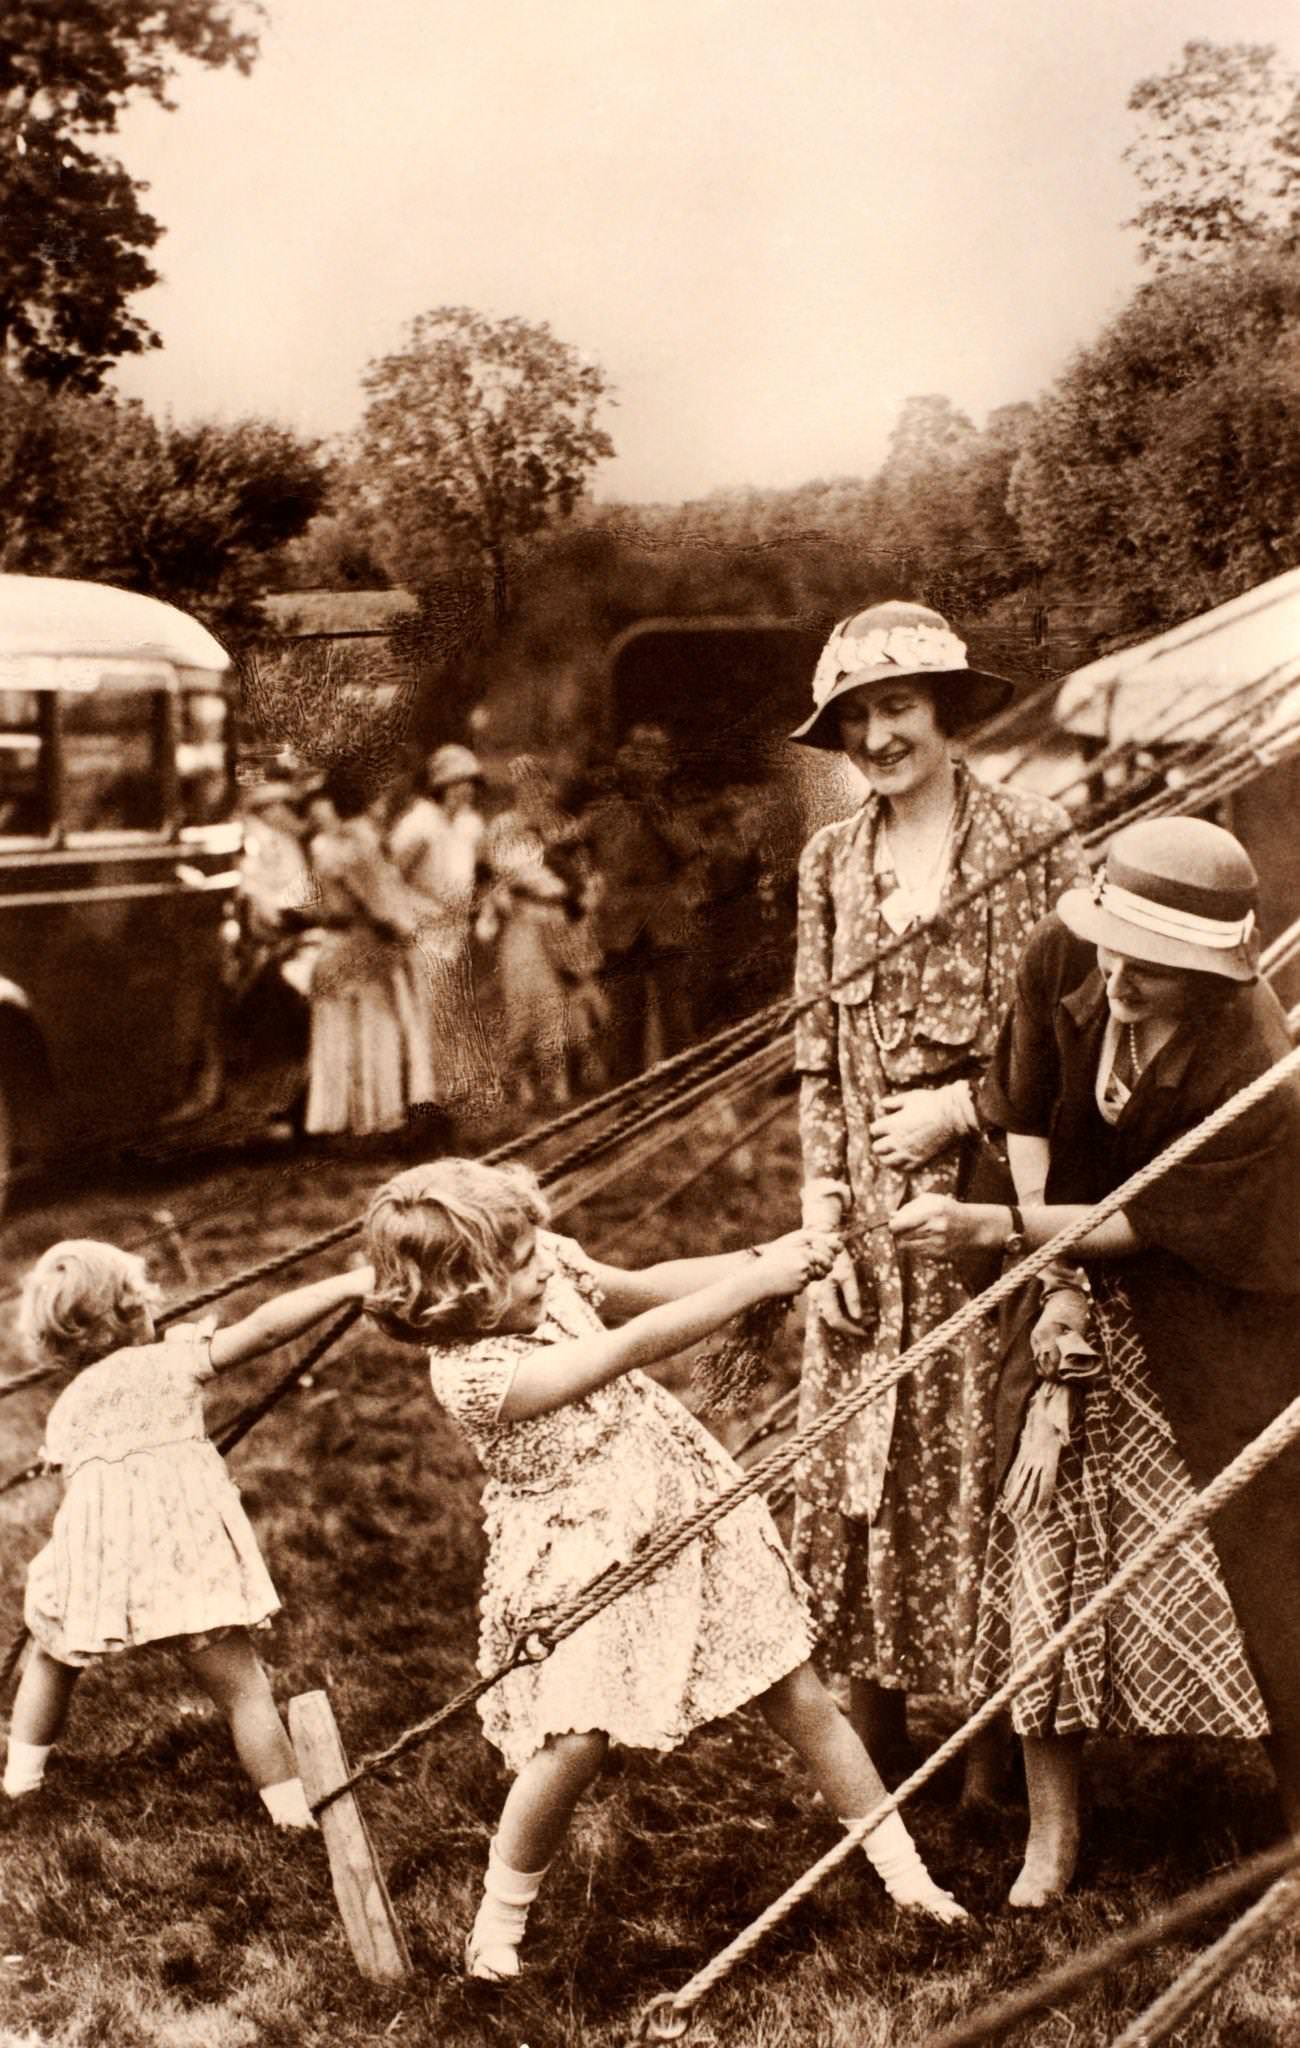 Princess Elizabeth and her sister Margaret Rose at play, circa 1931.